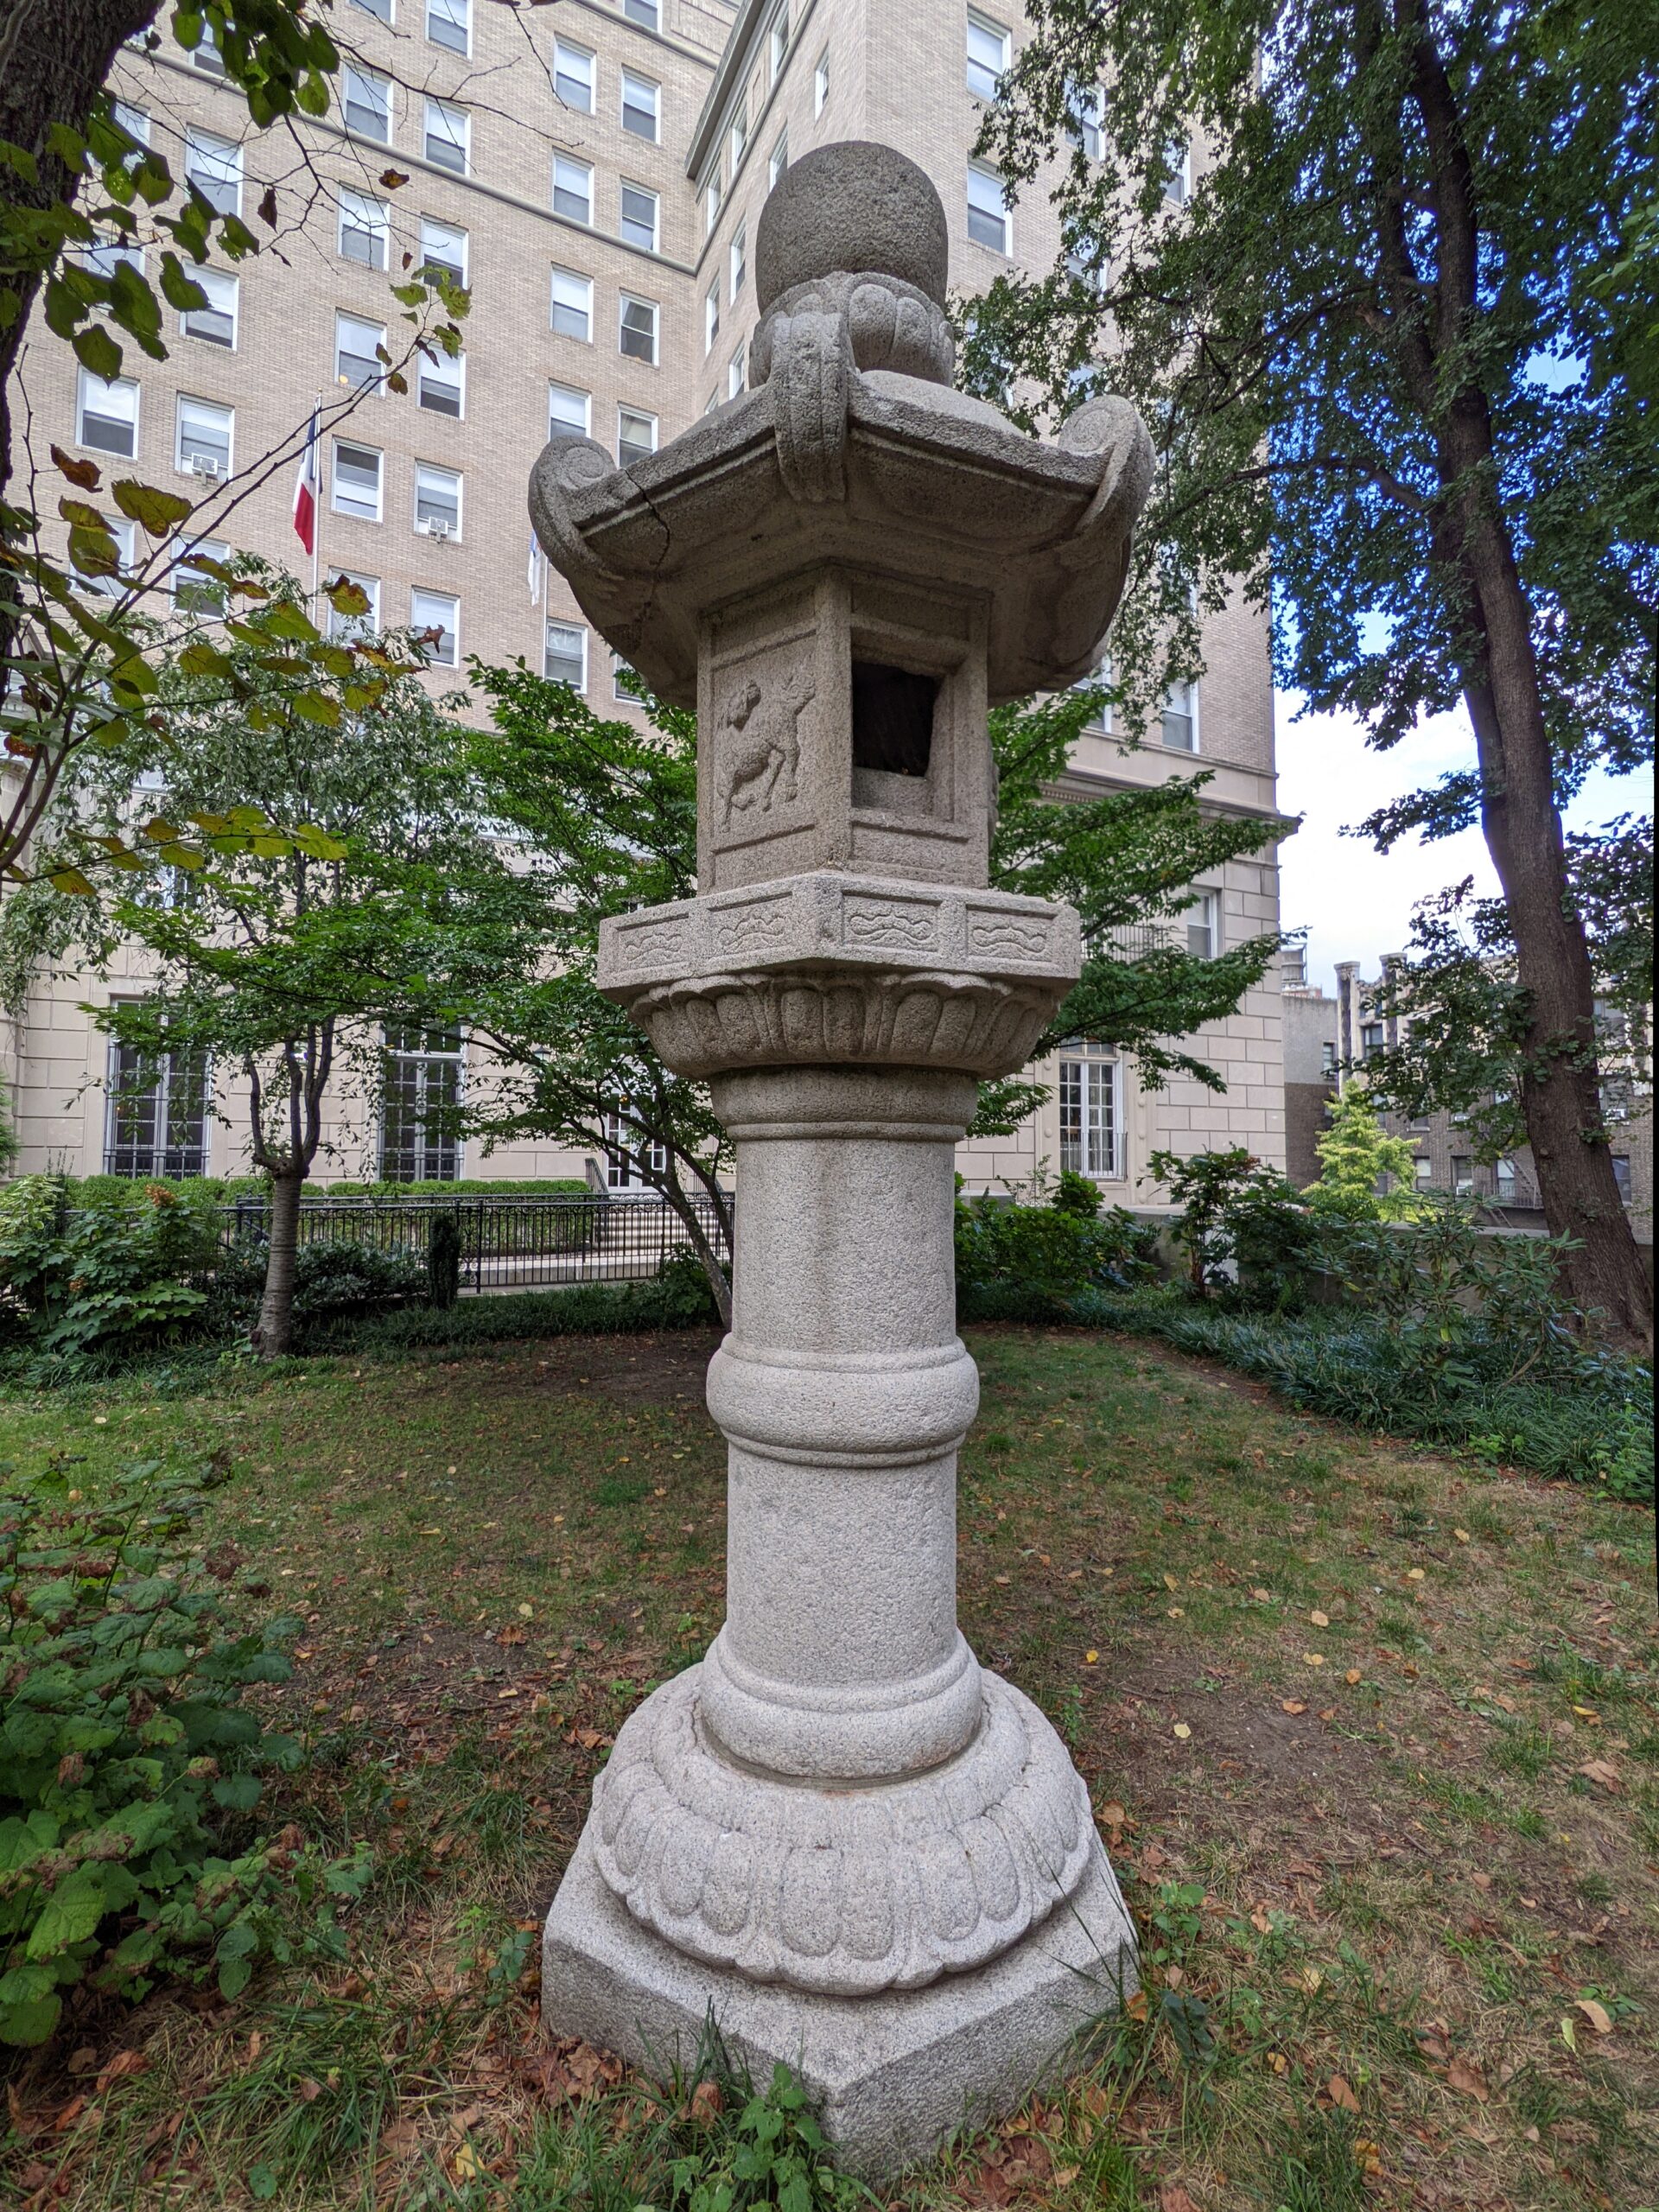 a lantern-like sculpture